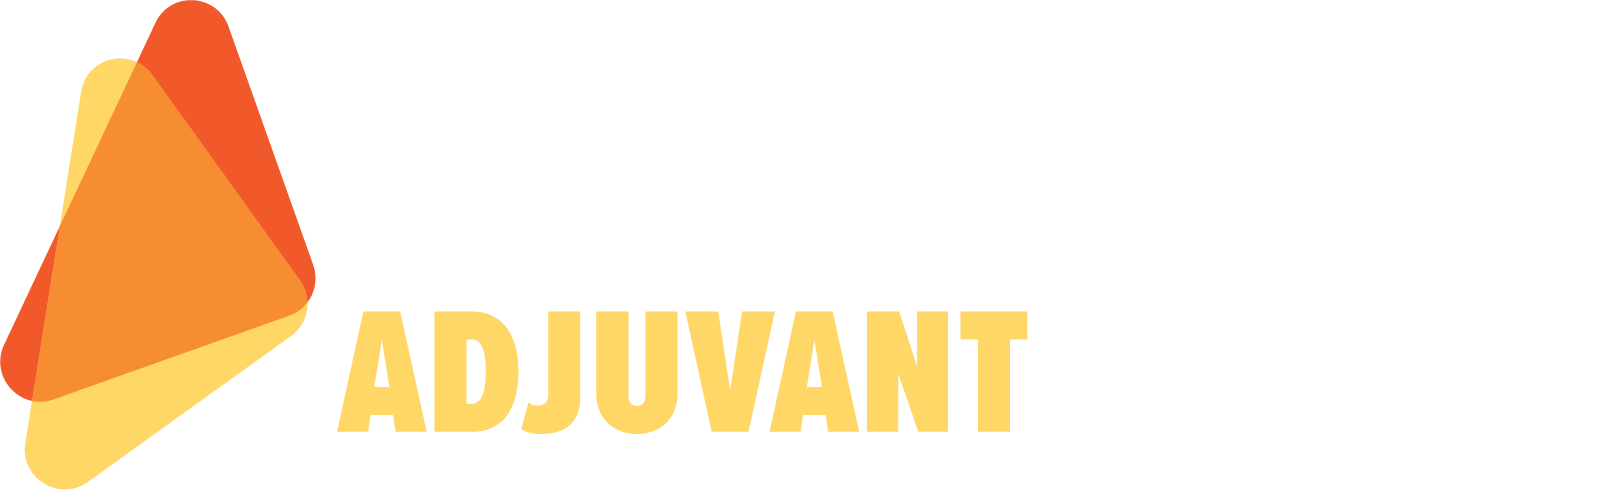 Harmony-Adjuvant logo in white